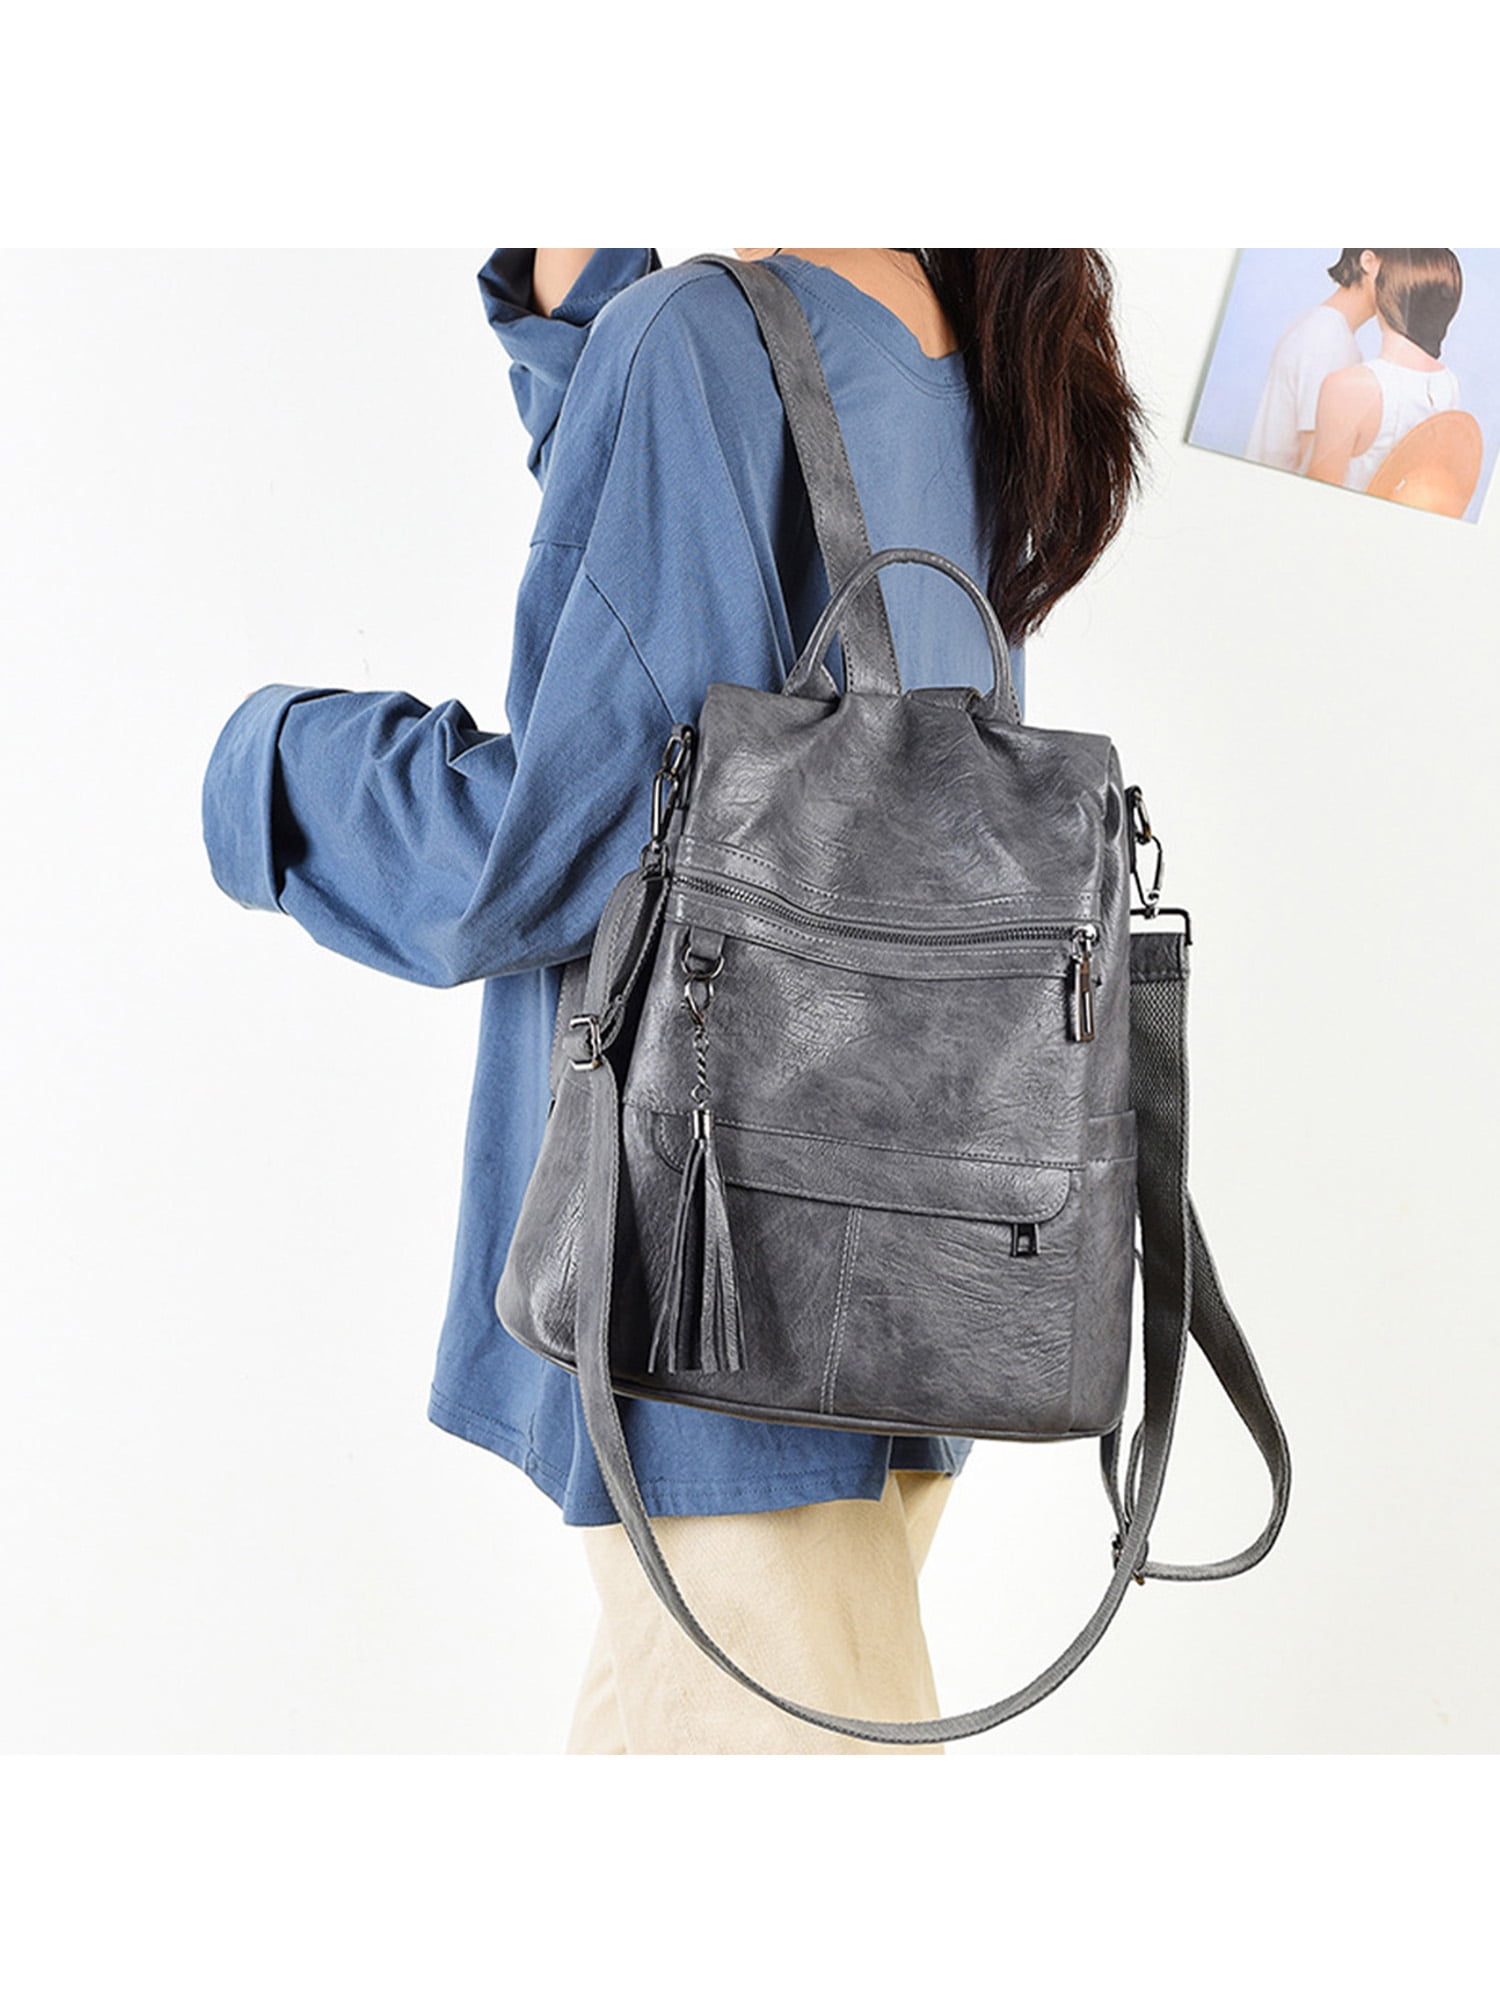 Rejlun Women Shoulder Bag Multi Pockets Tote Top Handle PU Leather Handbag  Large Capacity Ladies Fashion Zipper Detachable Adjustable Strap Brown 